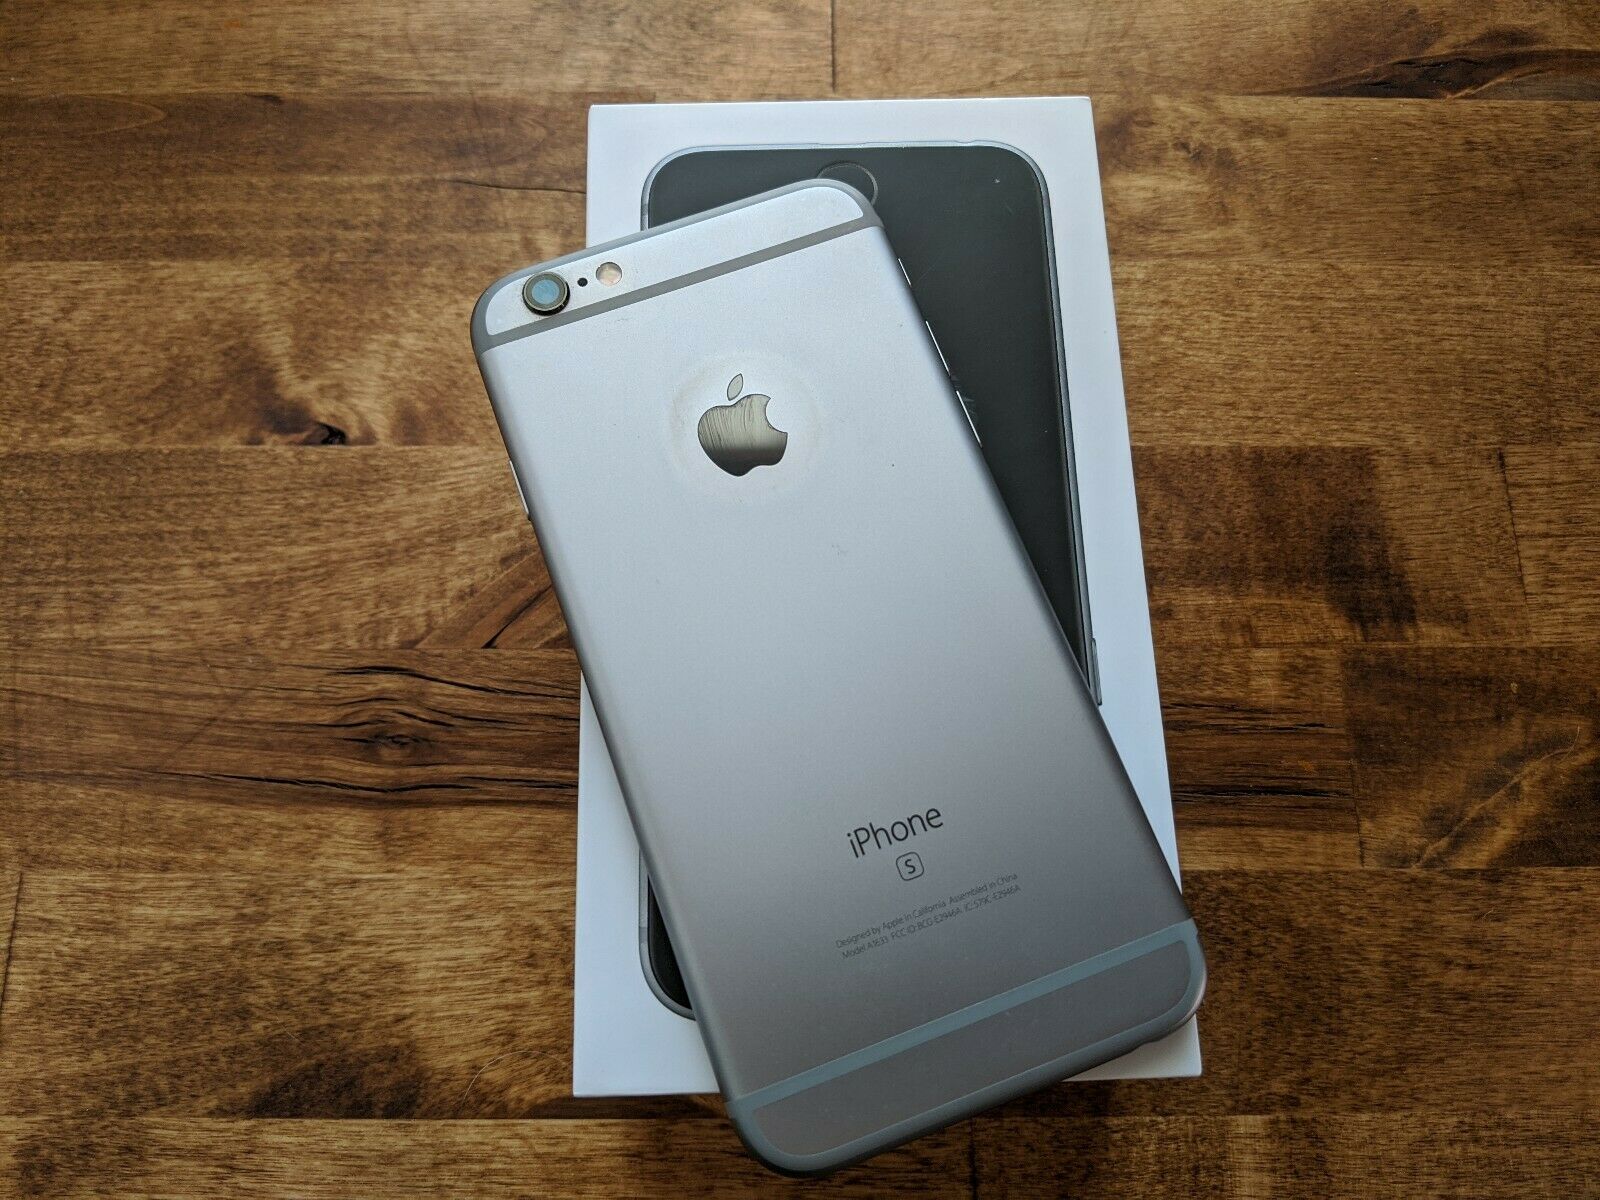 Apple iPhone 6 - Refurbished